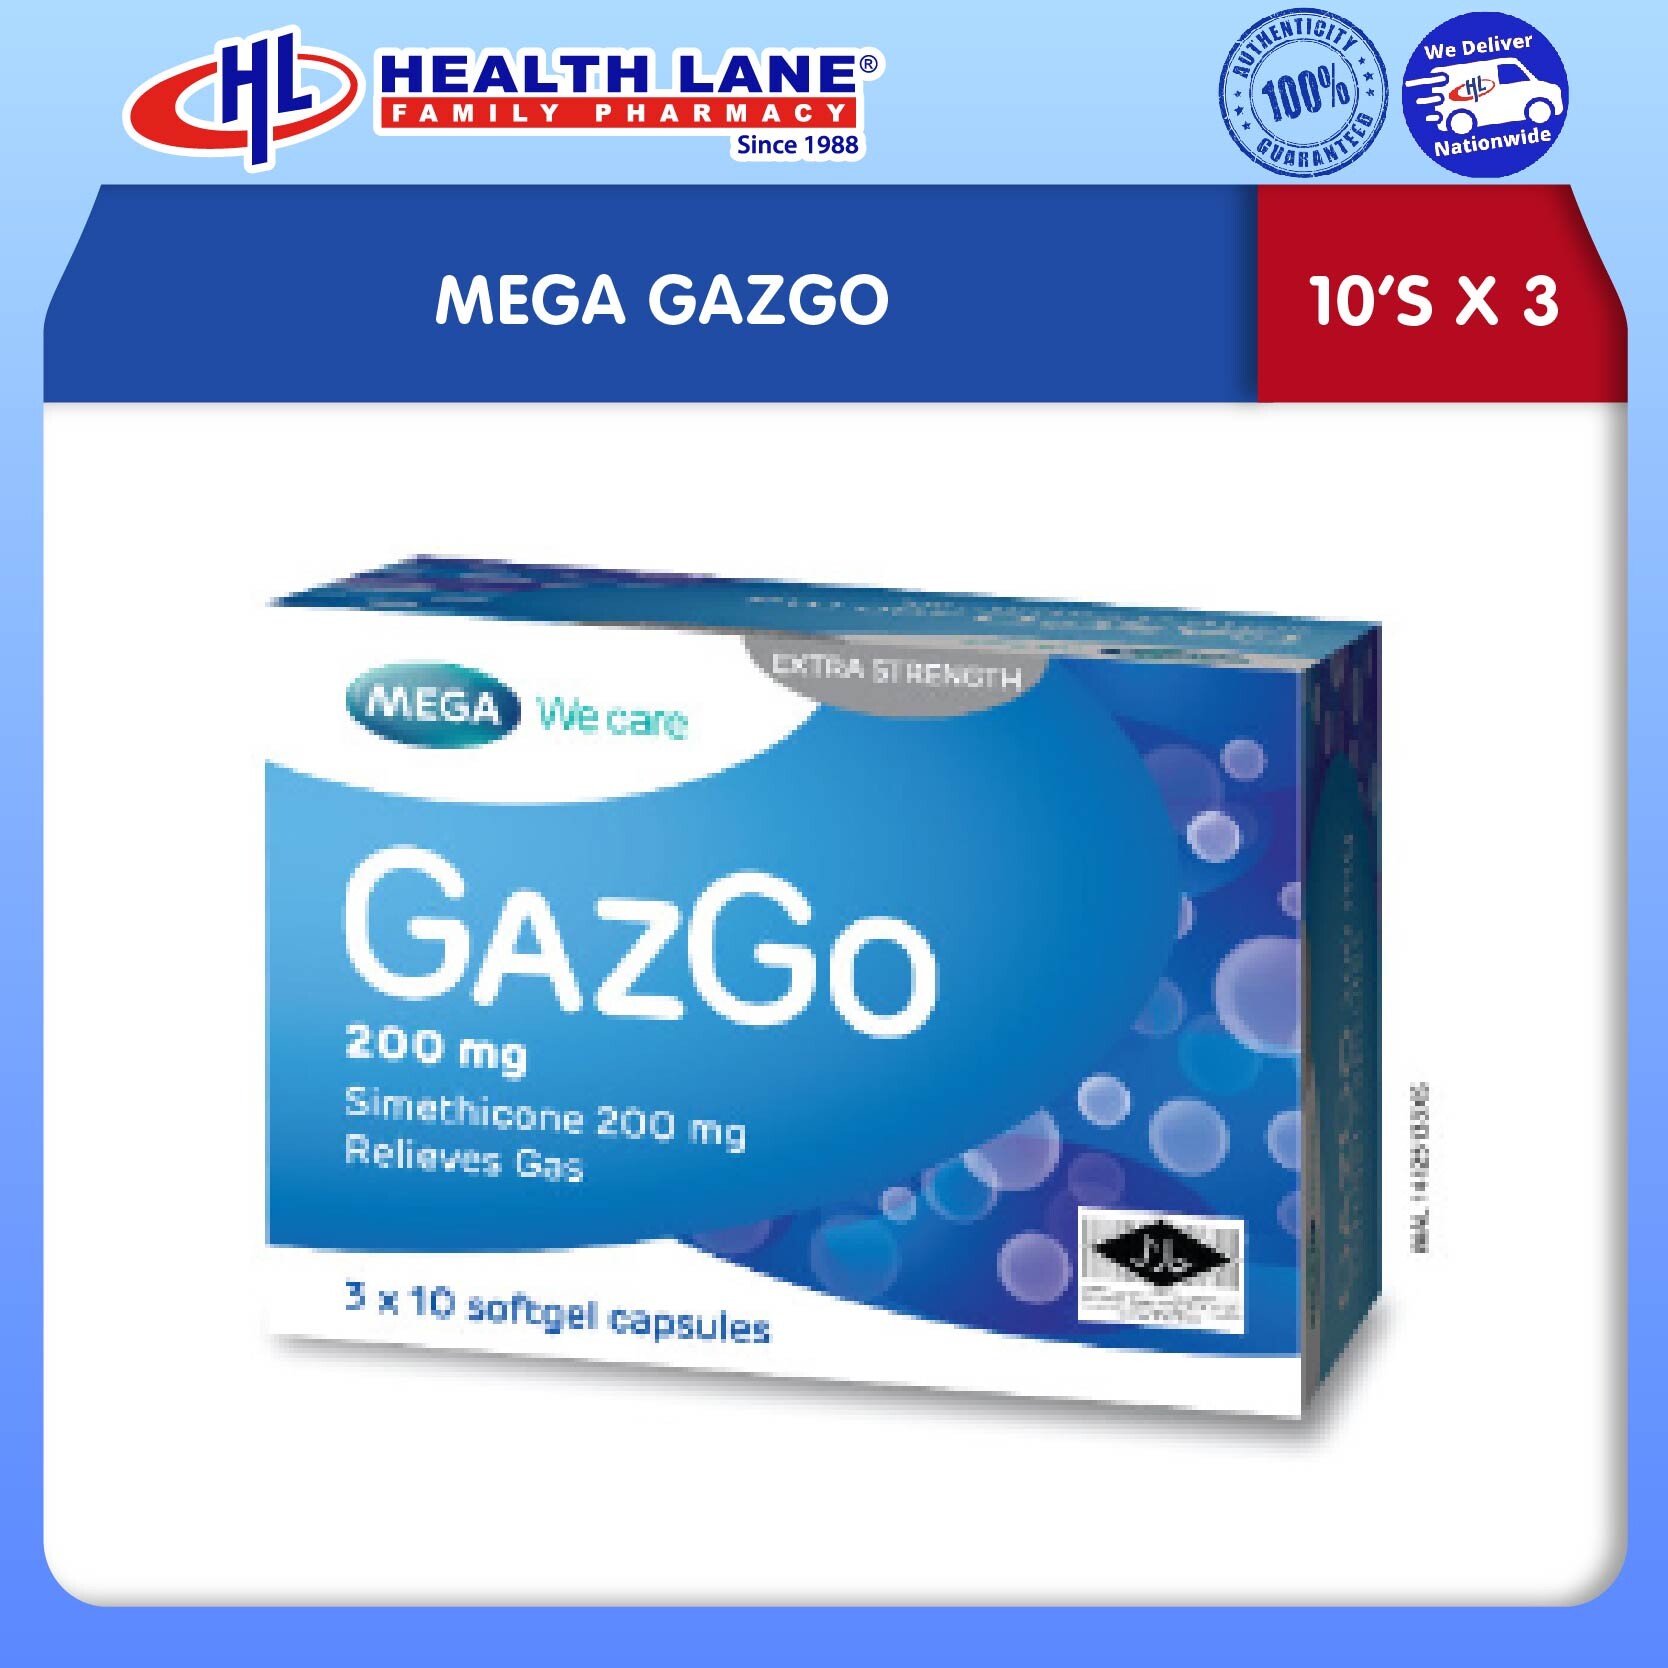 MEGA GAZGO (10'Sx3)